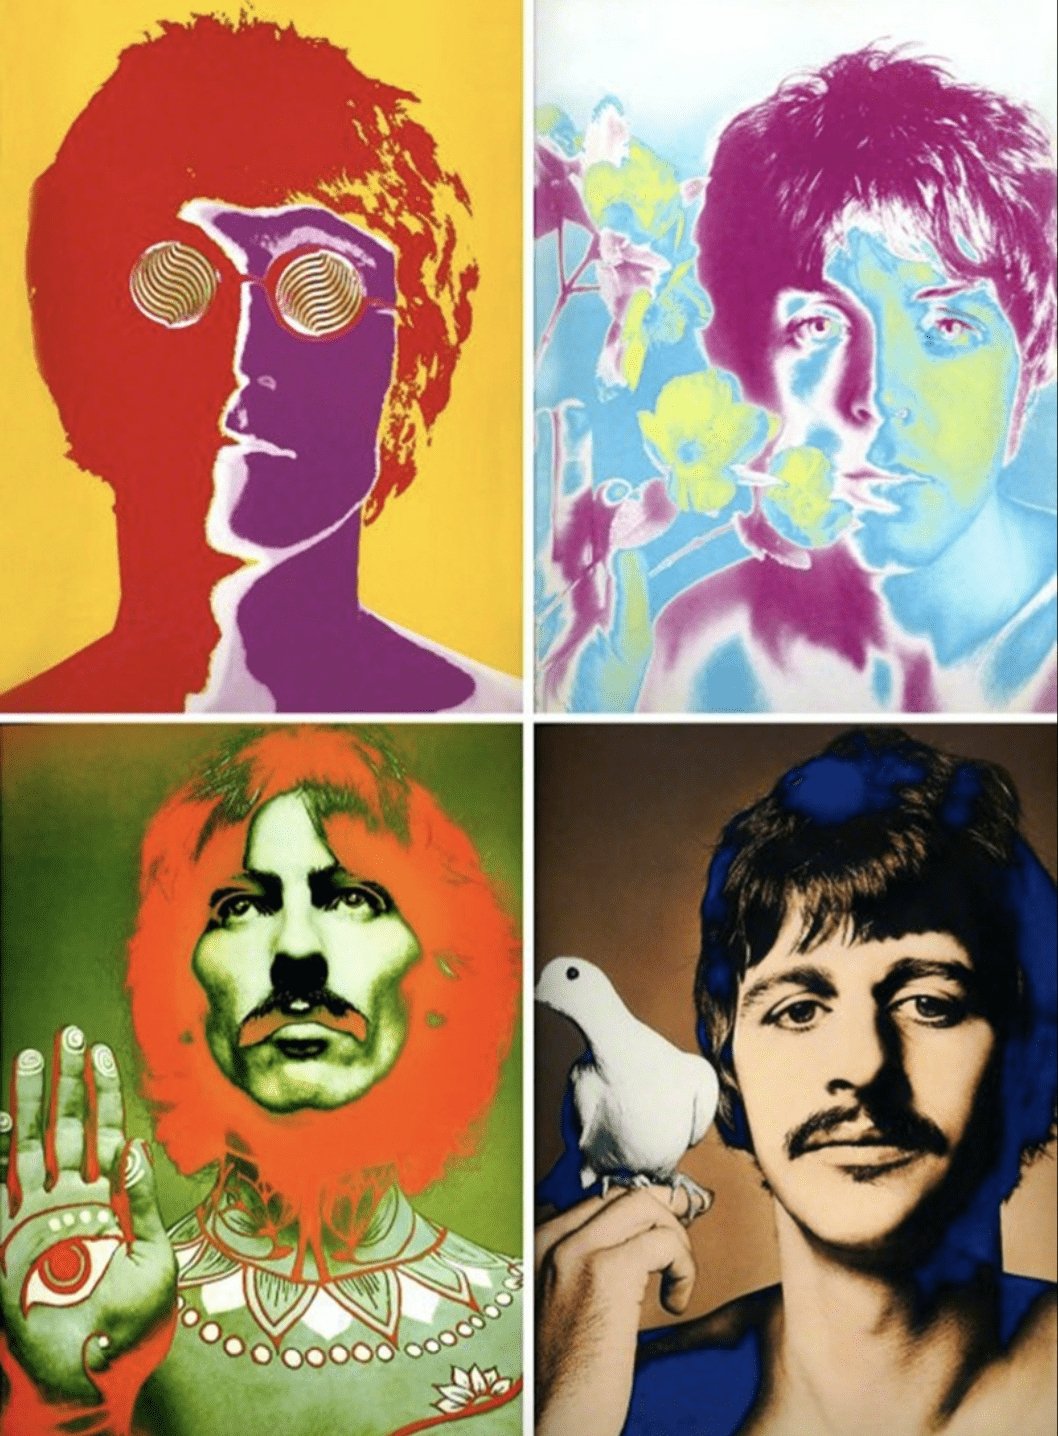 The Beatles by Richard Avedon - Set of 4